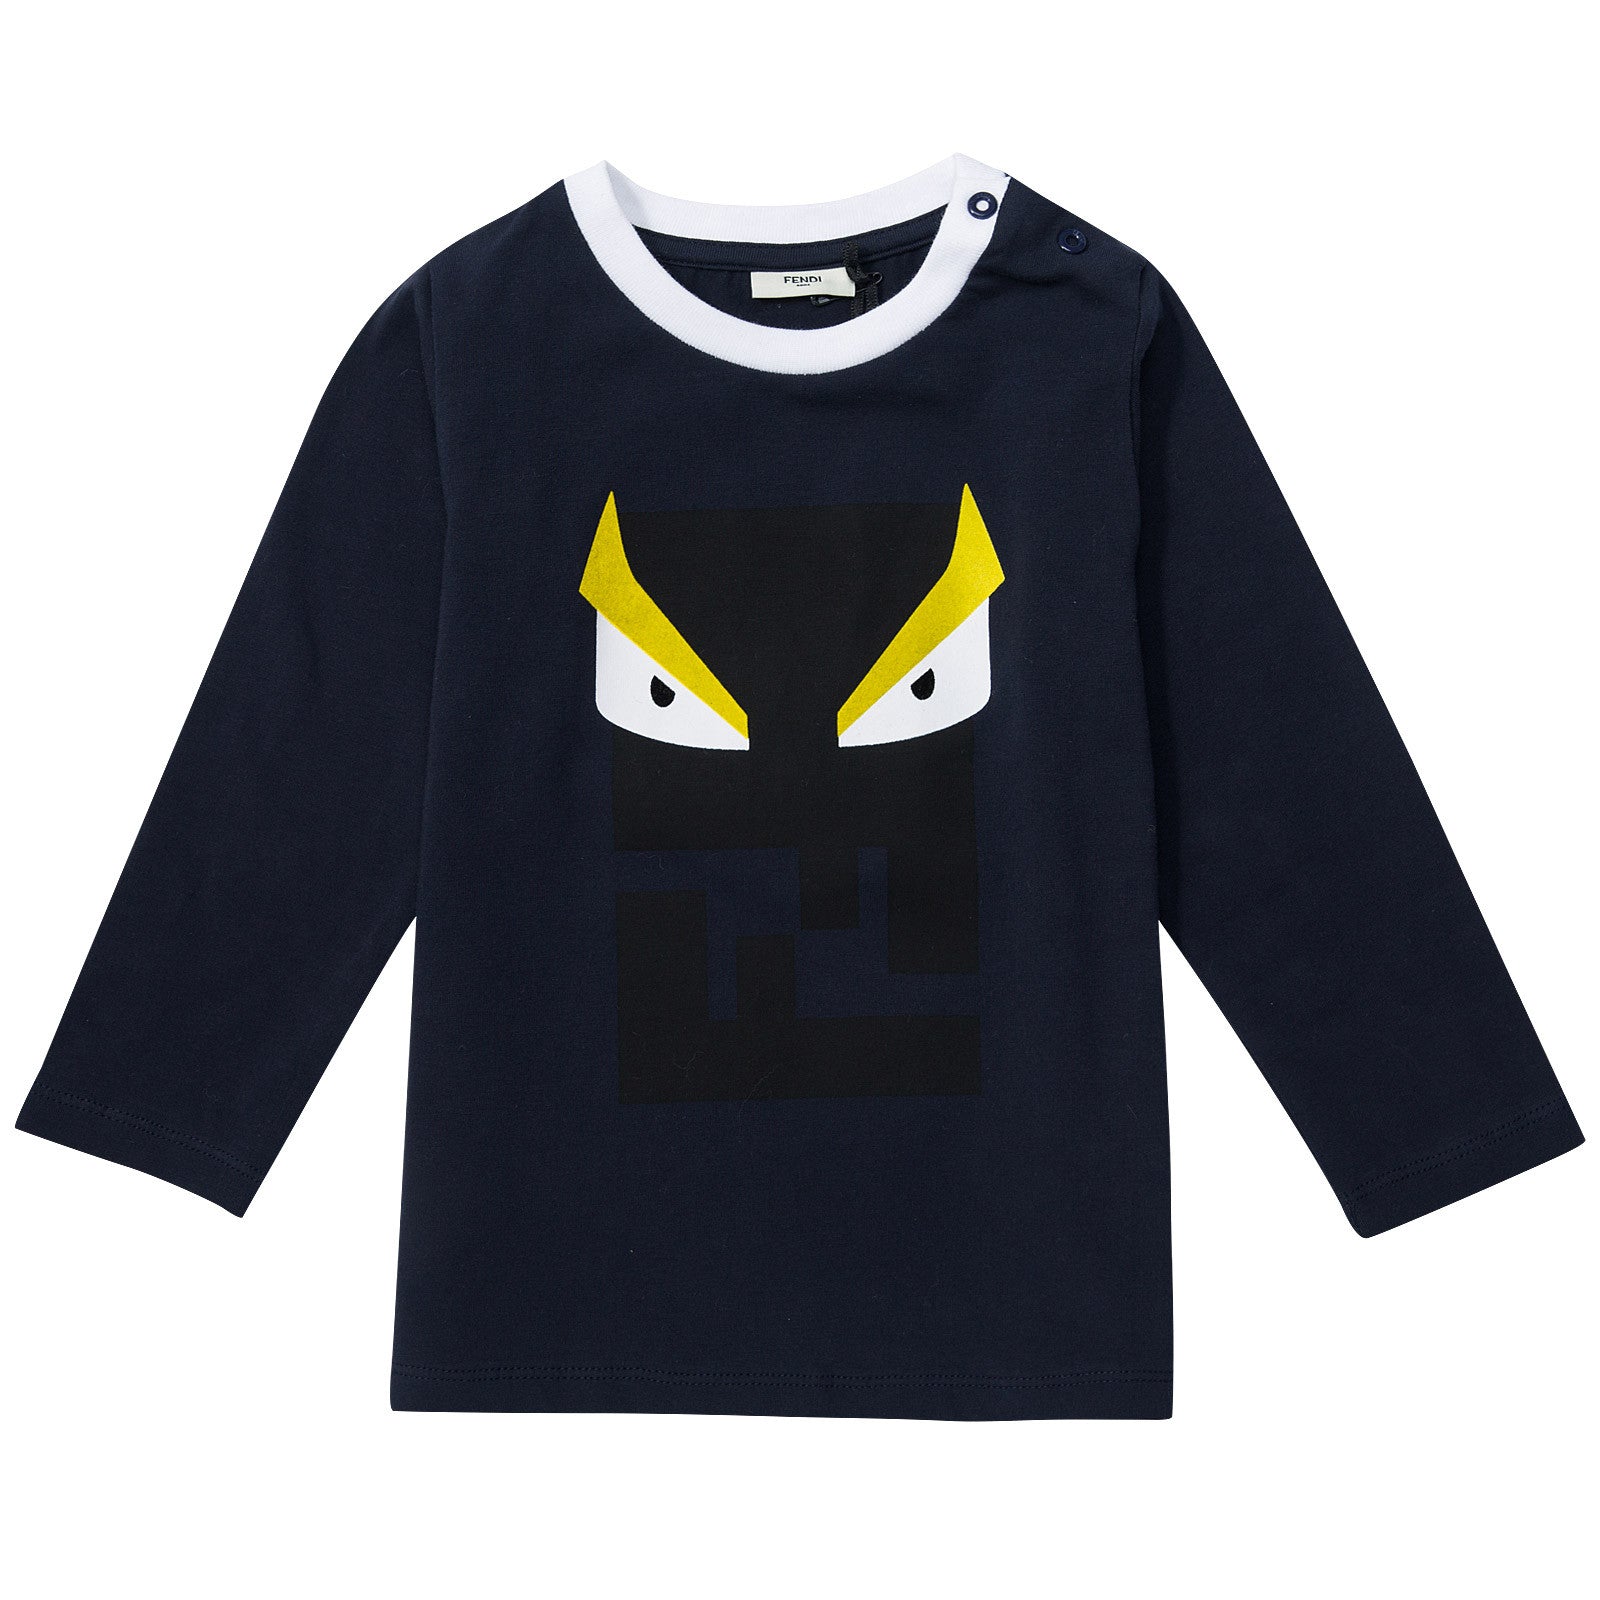 Baby Boys Navy Blue Monster Printed T-Shirt - CÉMAROSE | Children's Fashion Store - 1